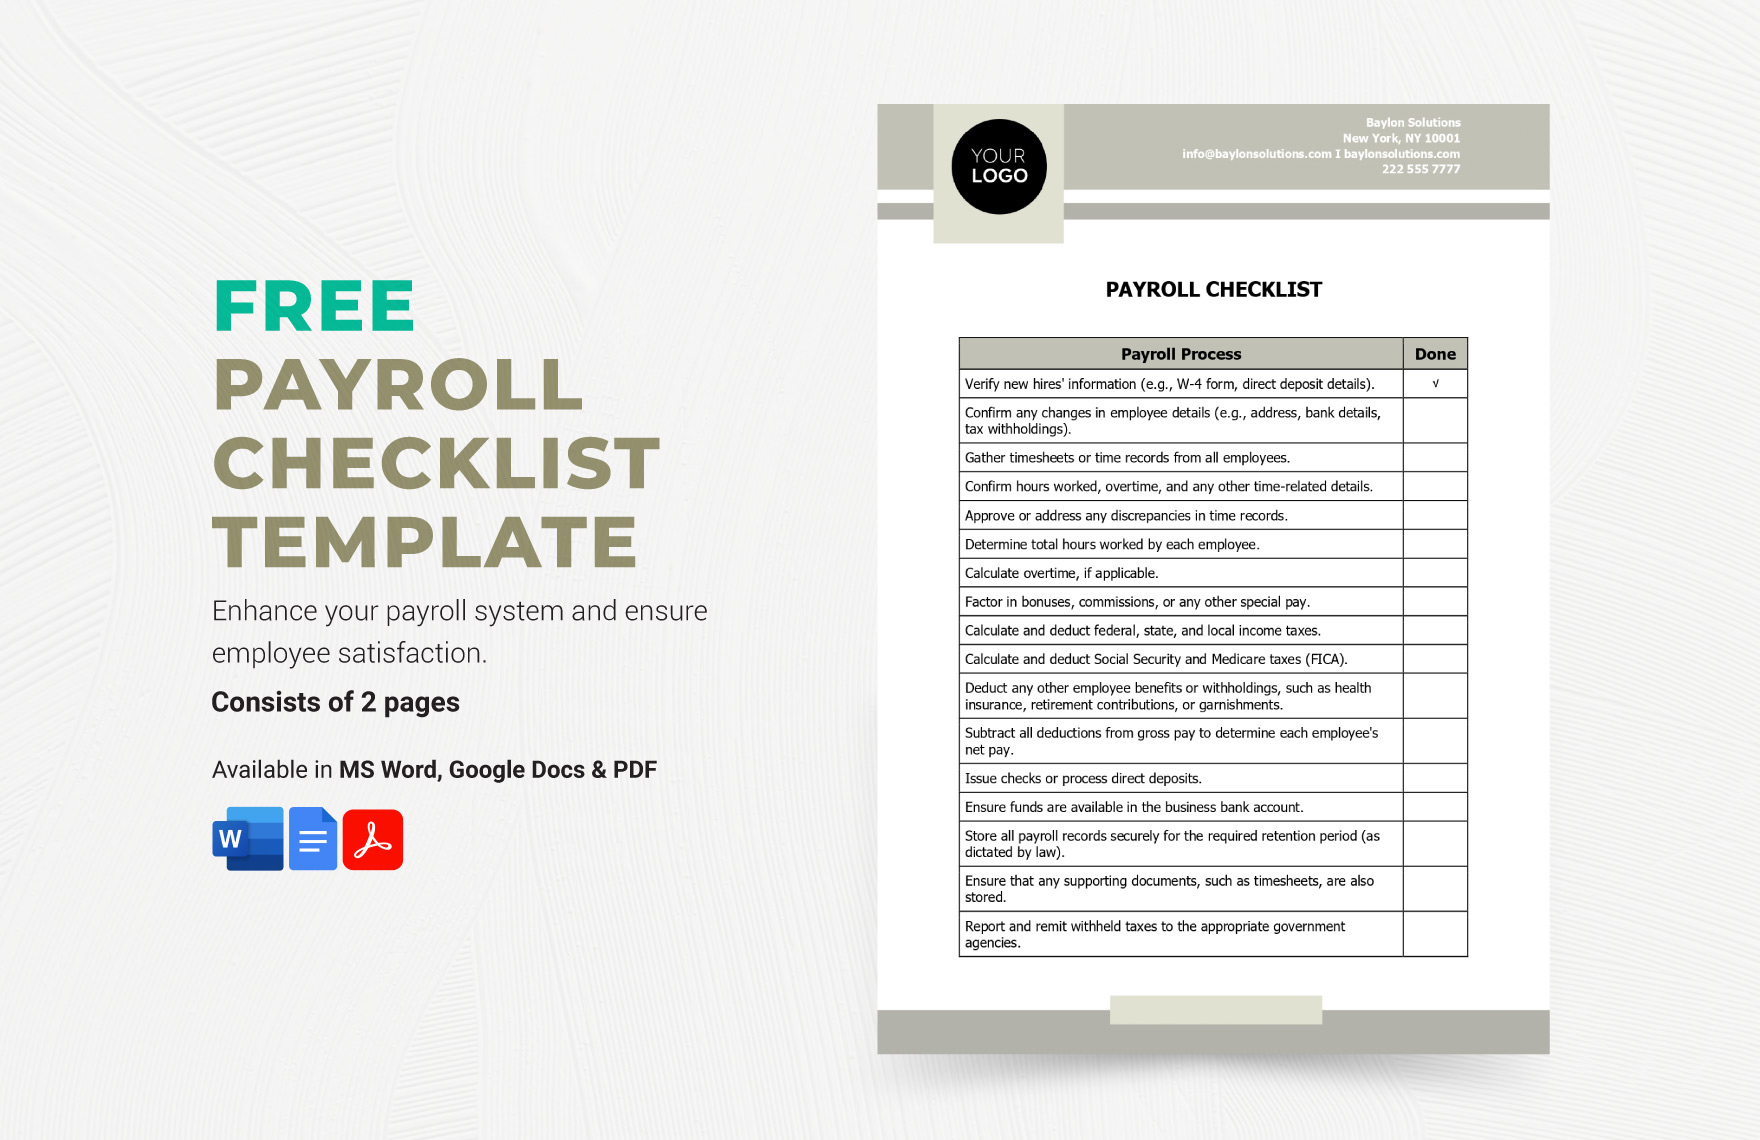 Payroll Checklist Template